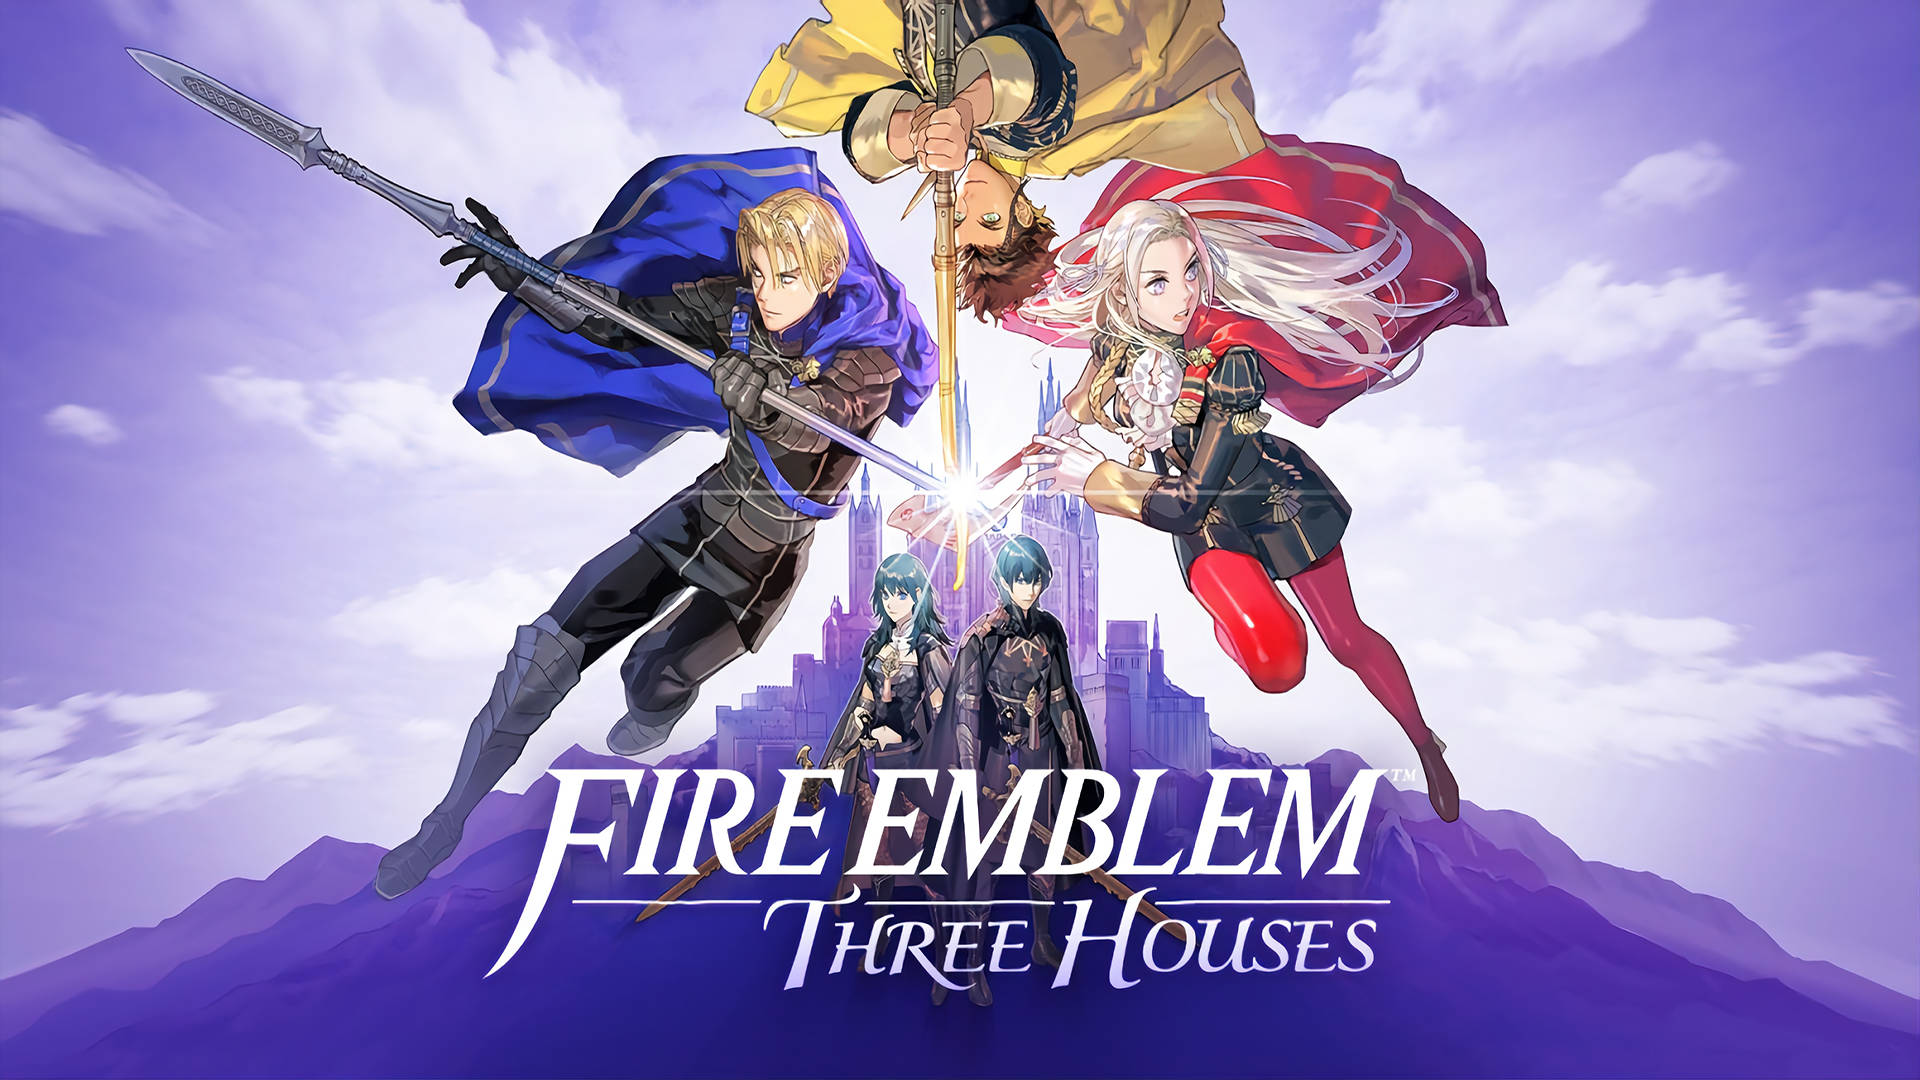 Hd Fire Emblem Three Houses Cover